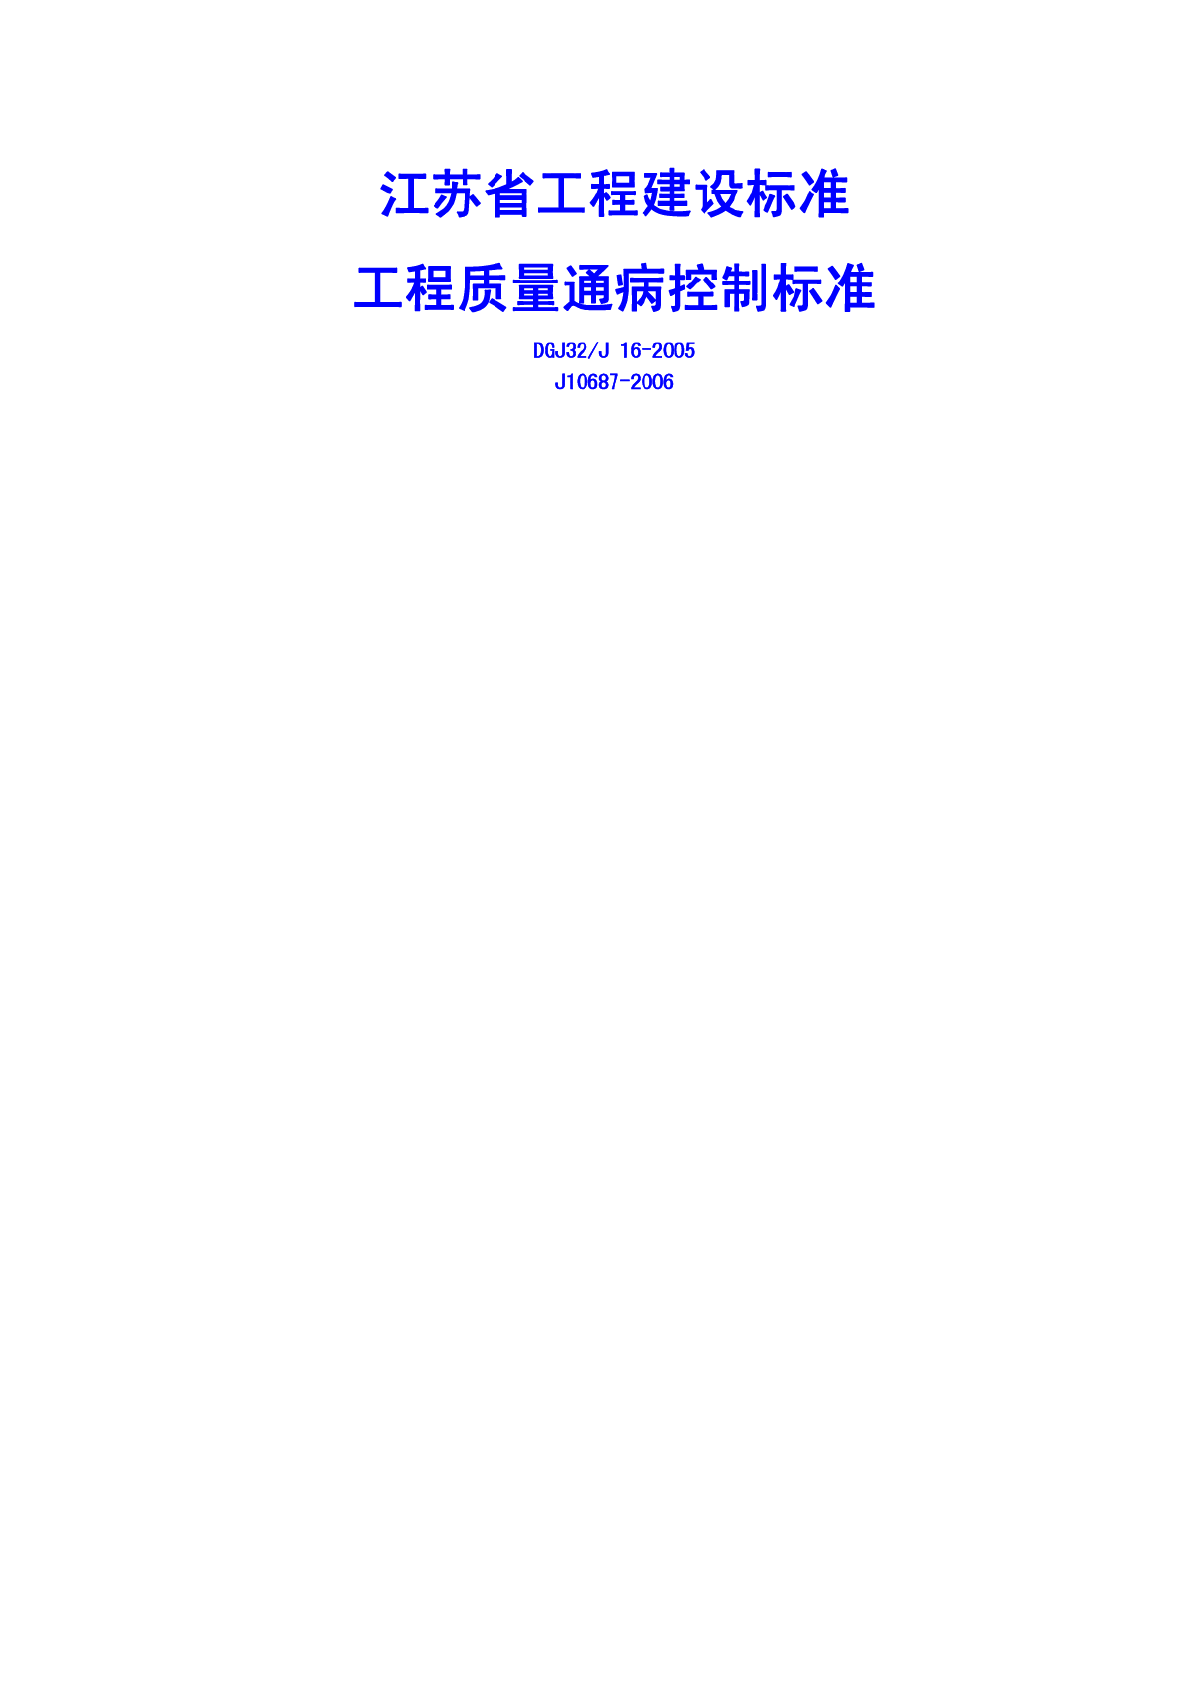 DGJ32／J16-2005 江苏省住宅工程质量通病控制标准.pdf-图一